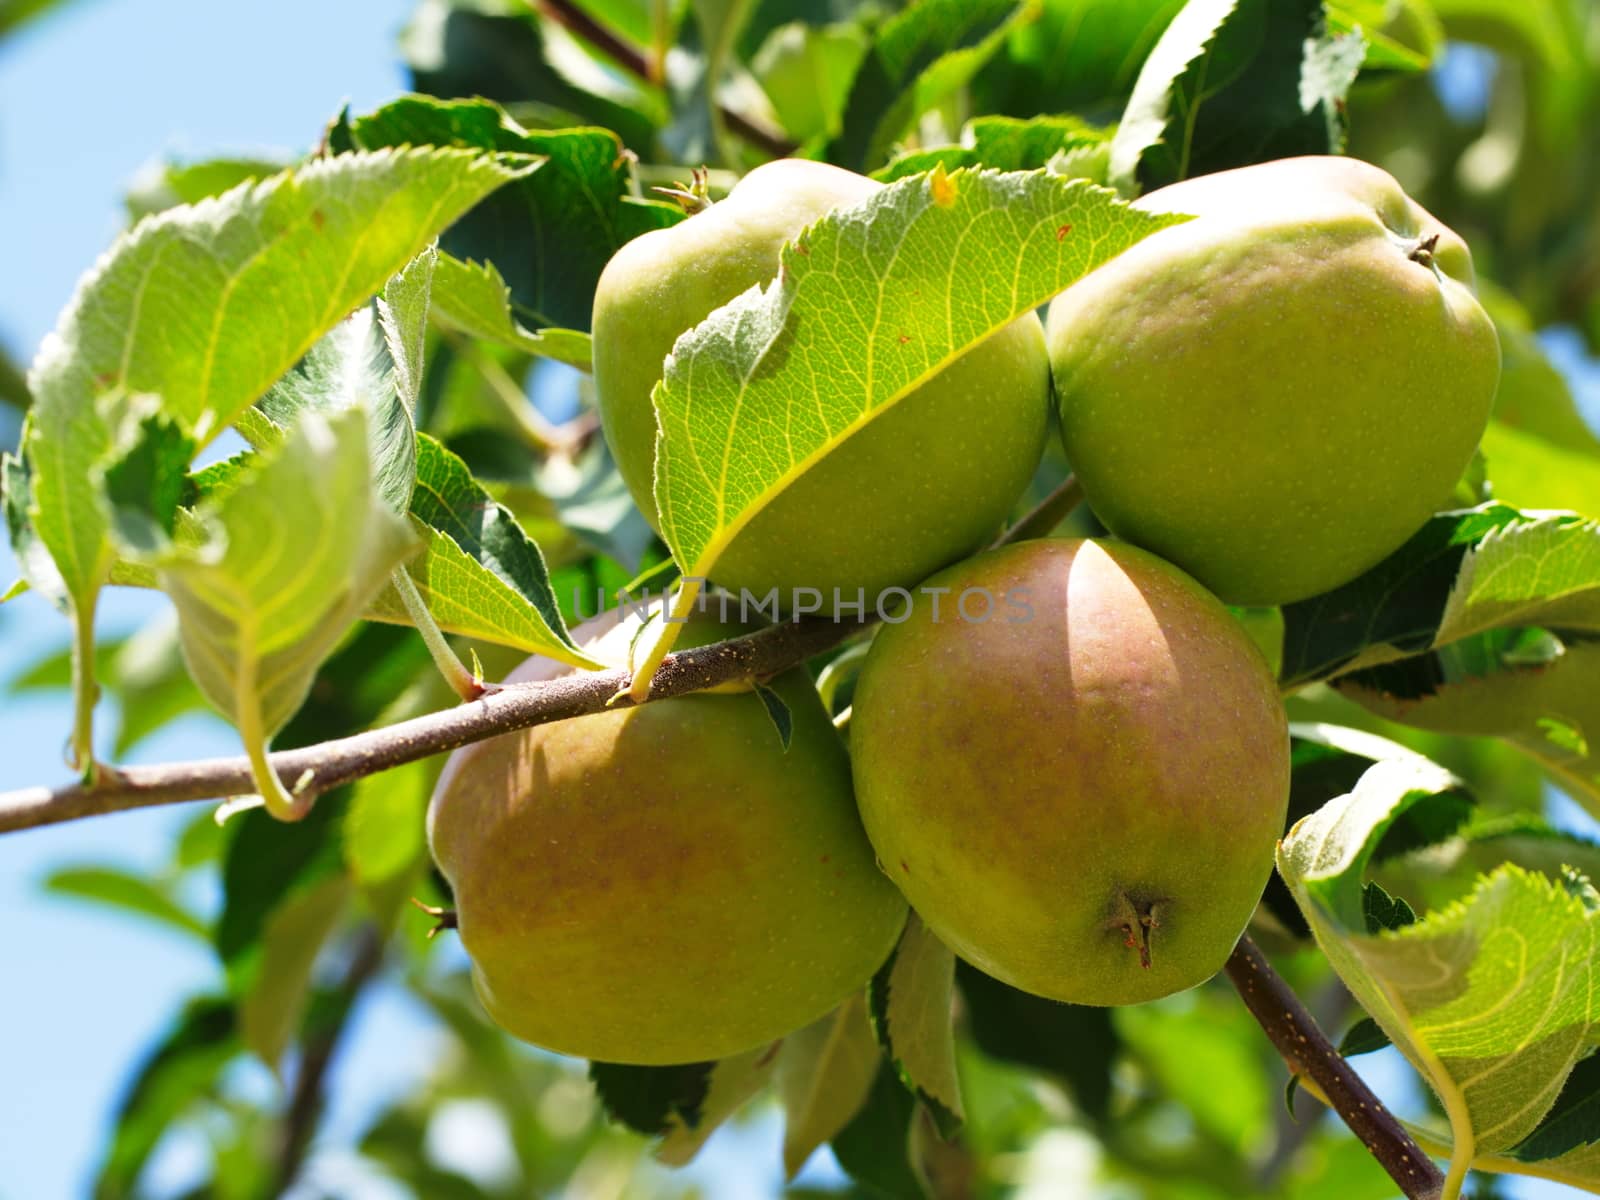 sour apple fruit. natural macro shooting in apple tree.